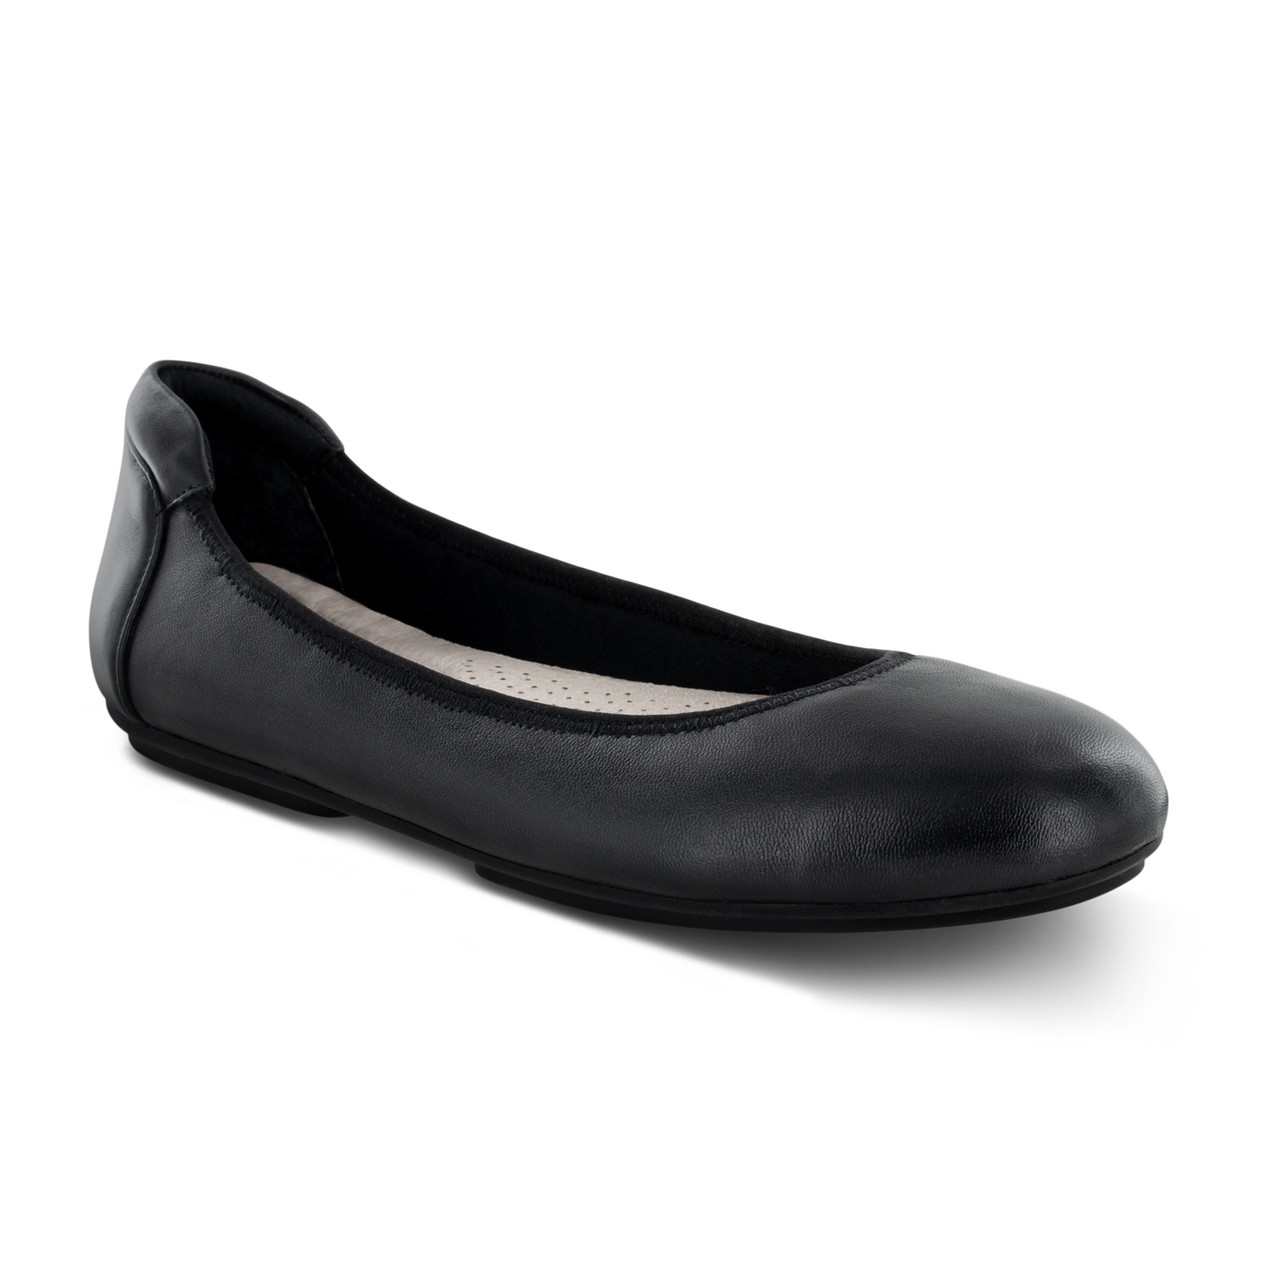 women's ballet flat shoes